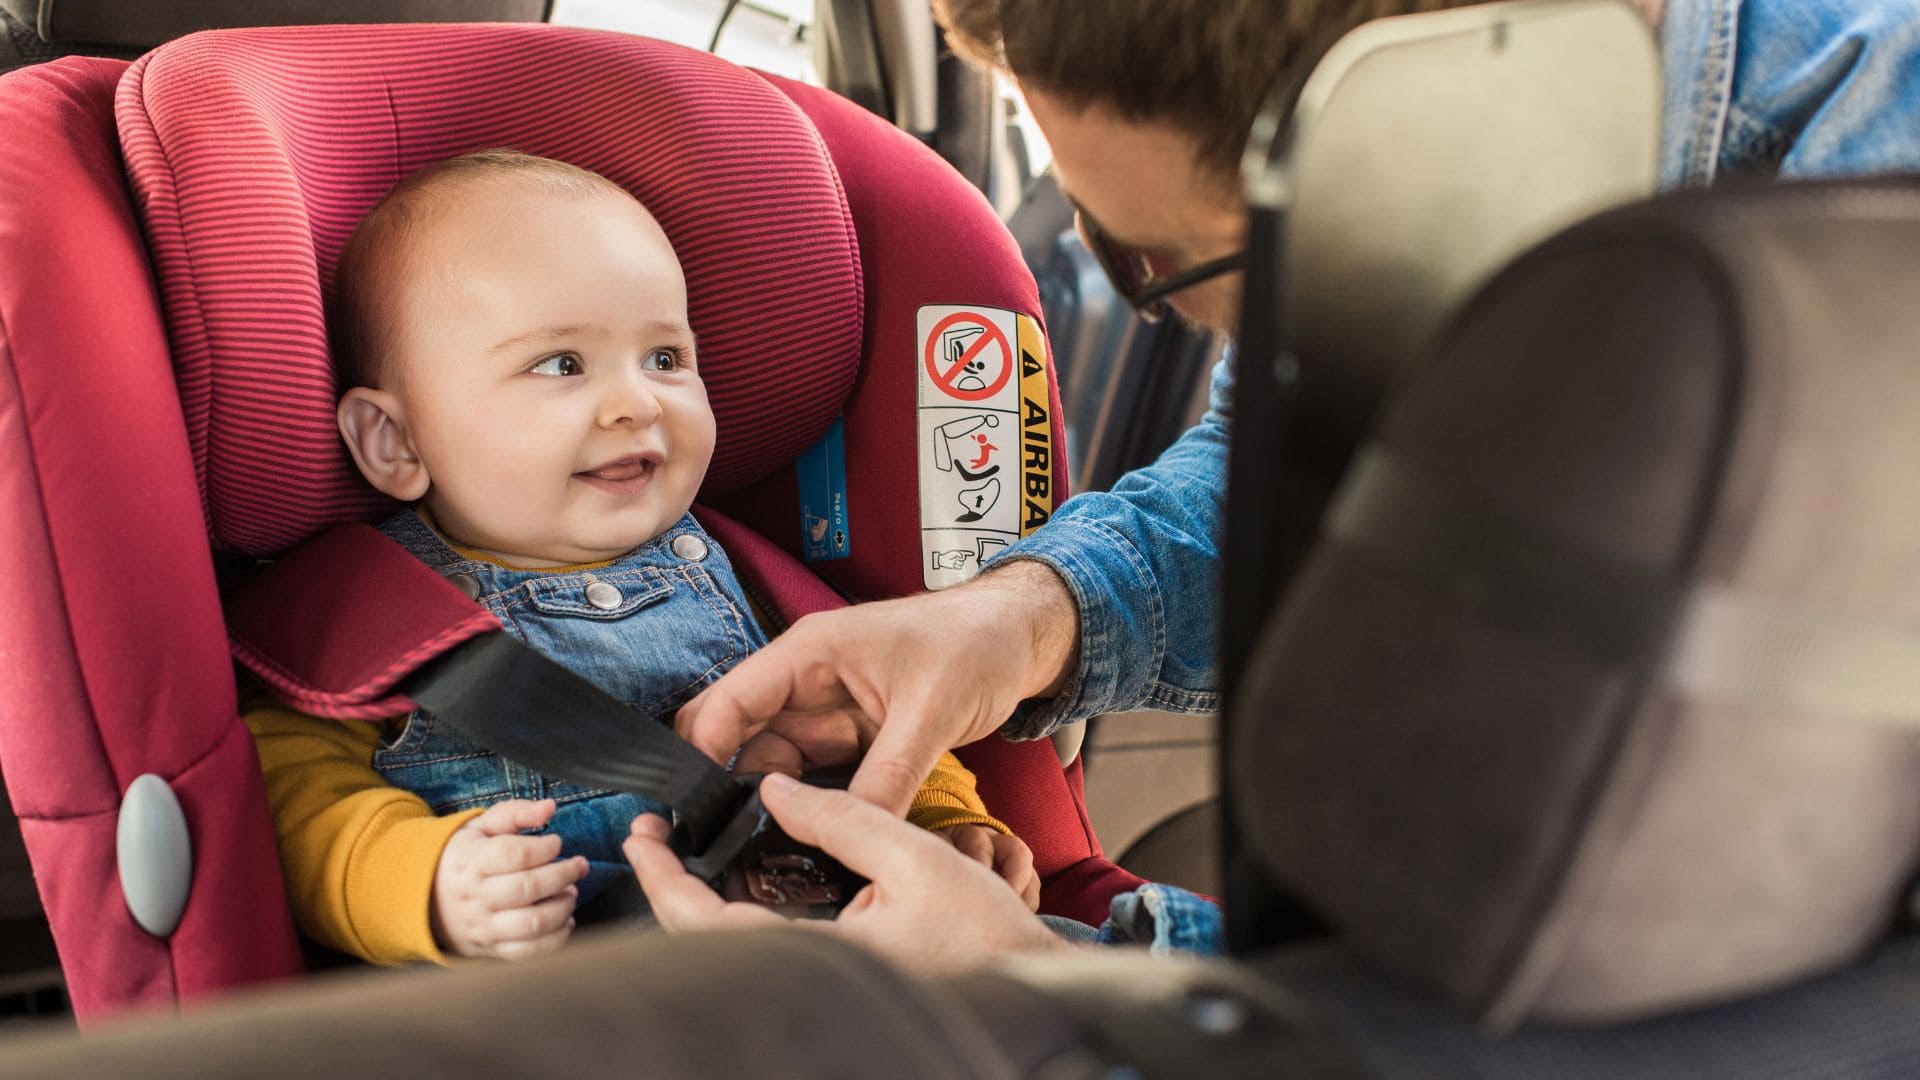 La OCU alerta de una silla infantil para el coche potencialmente peligrosa